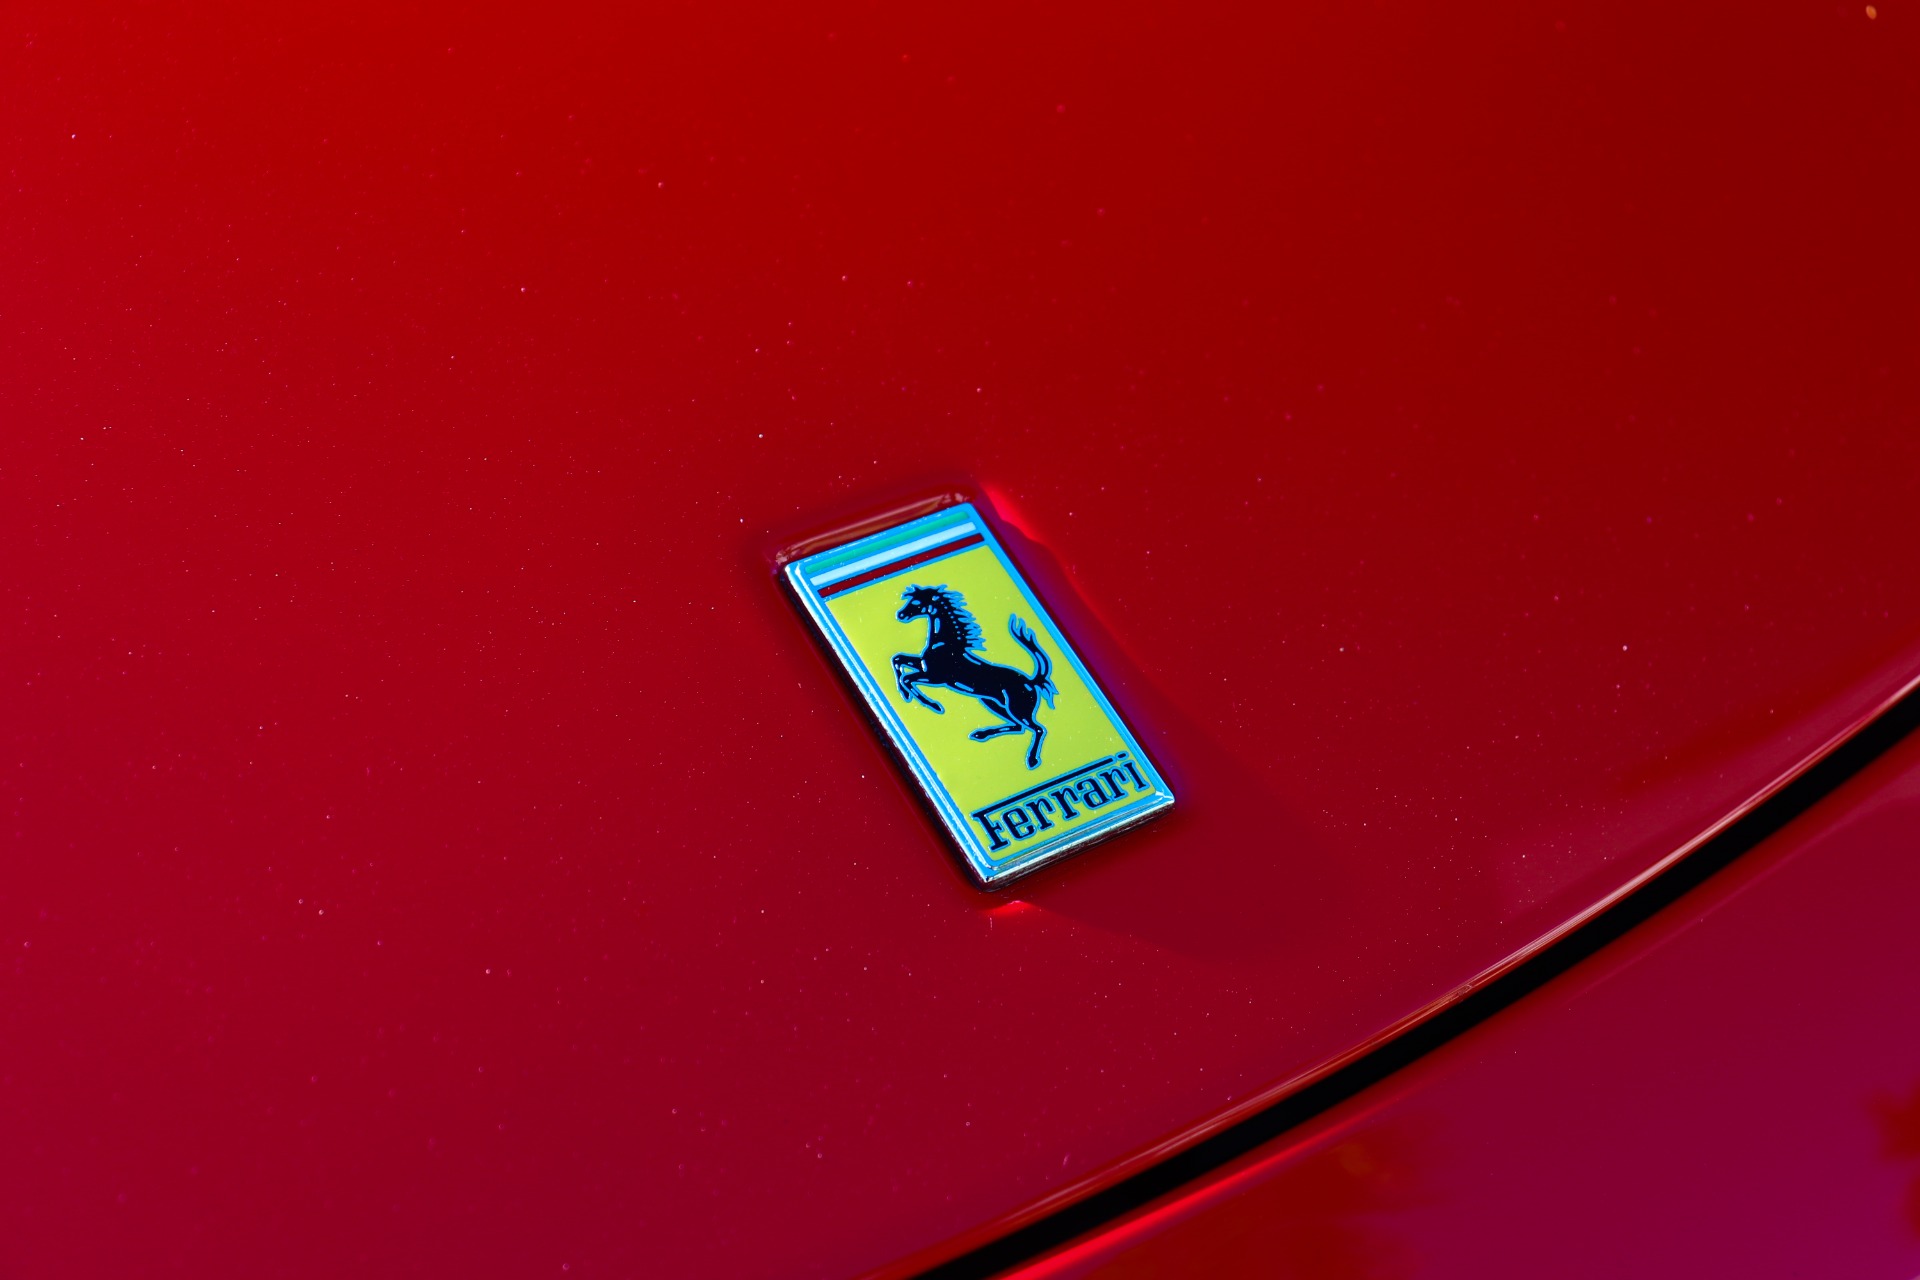 Used 2006 Ferrari F430 Spider For Sale ($234,000) | Marino Performance ...